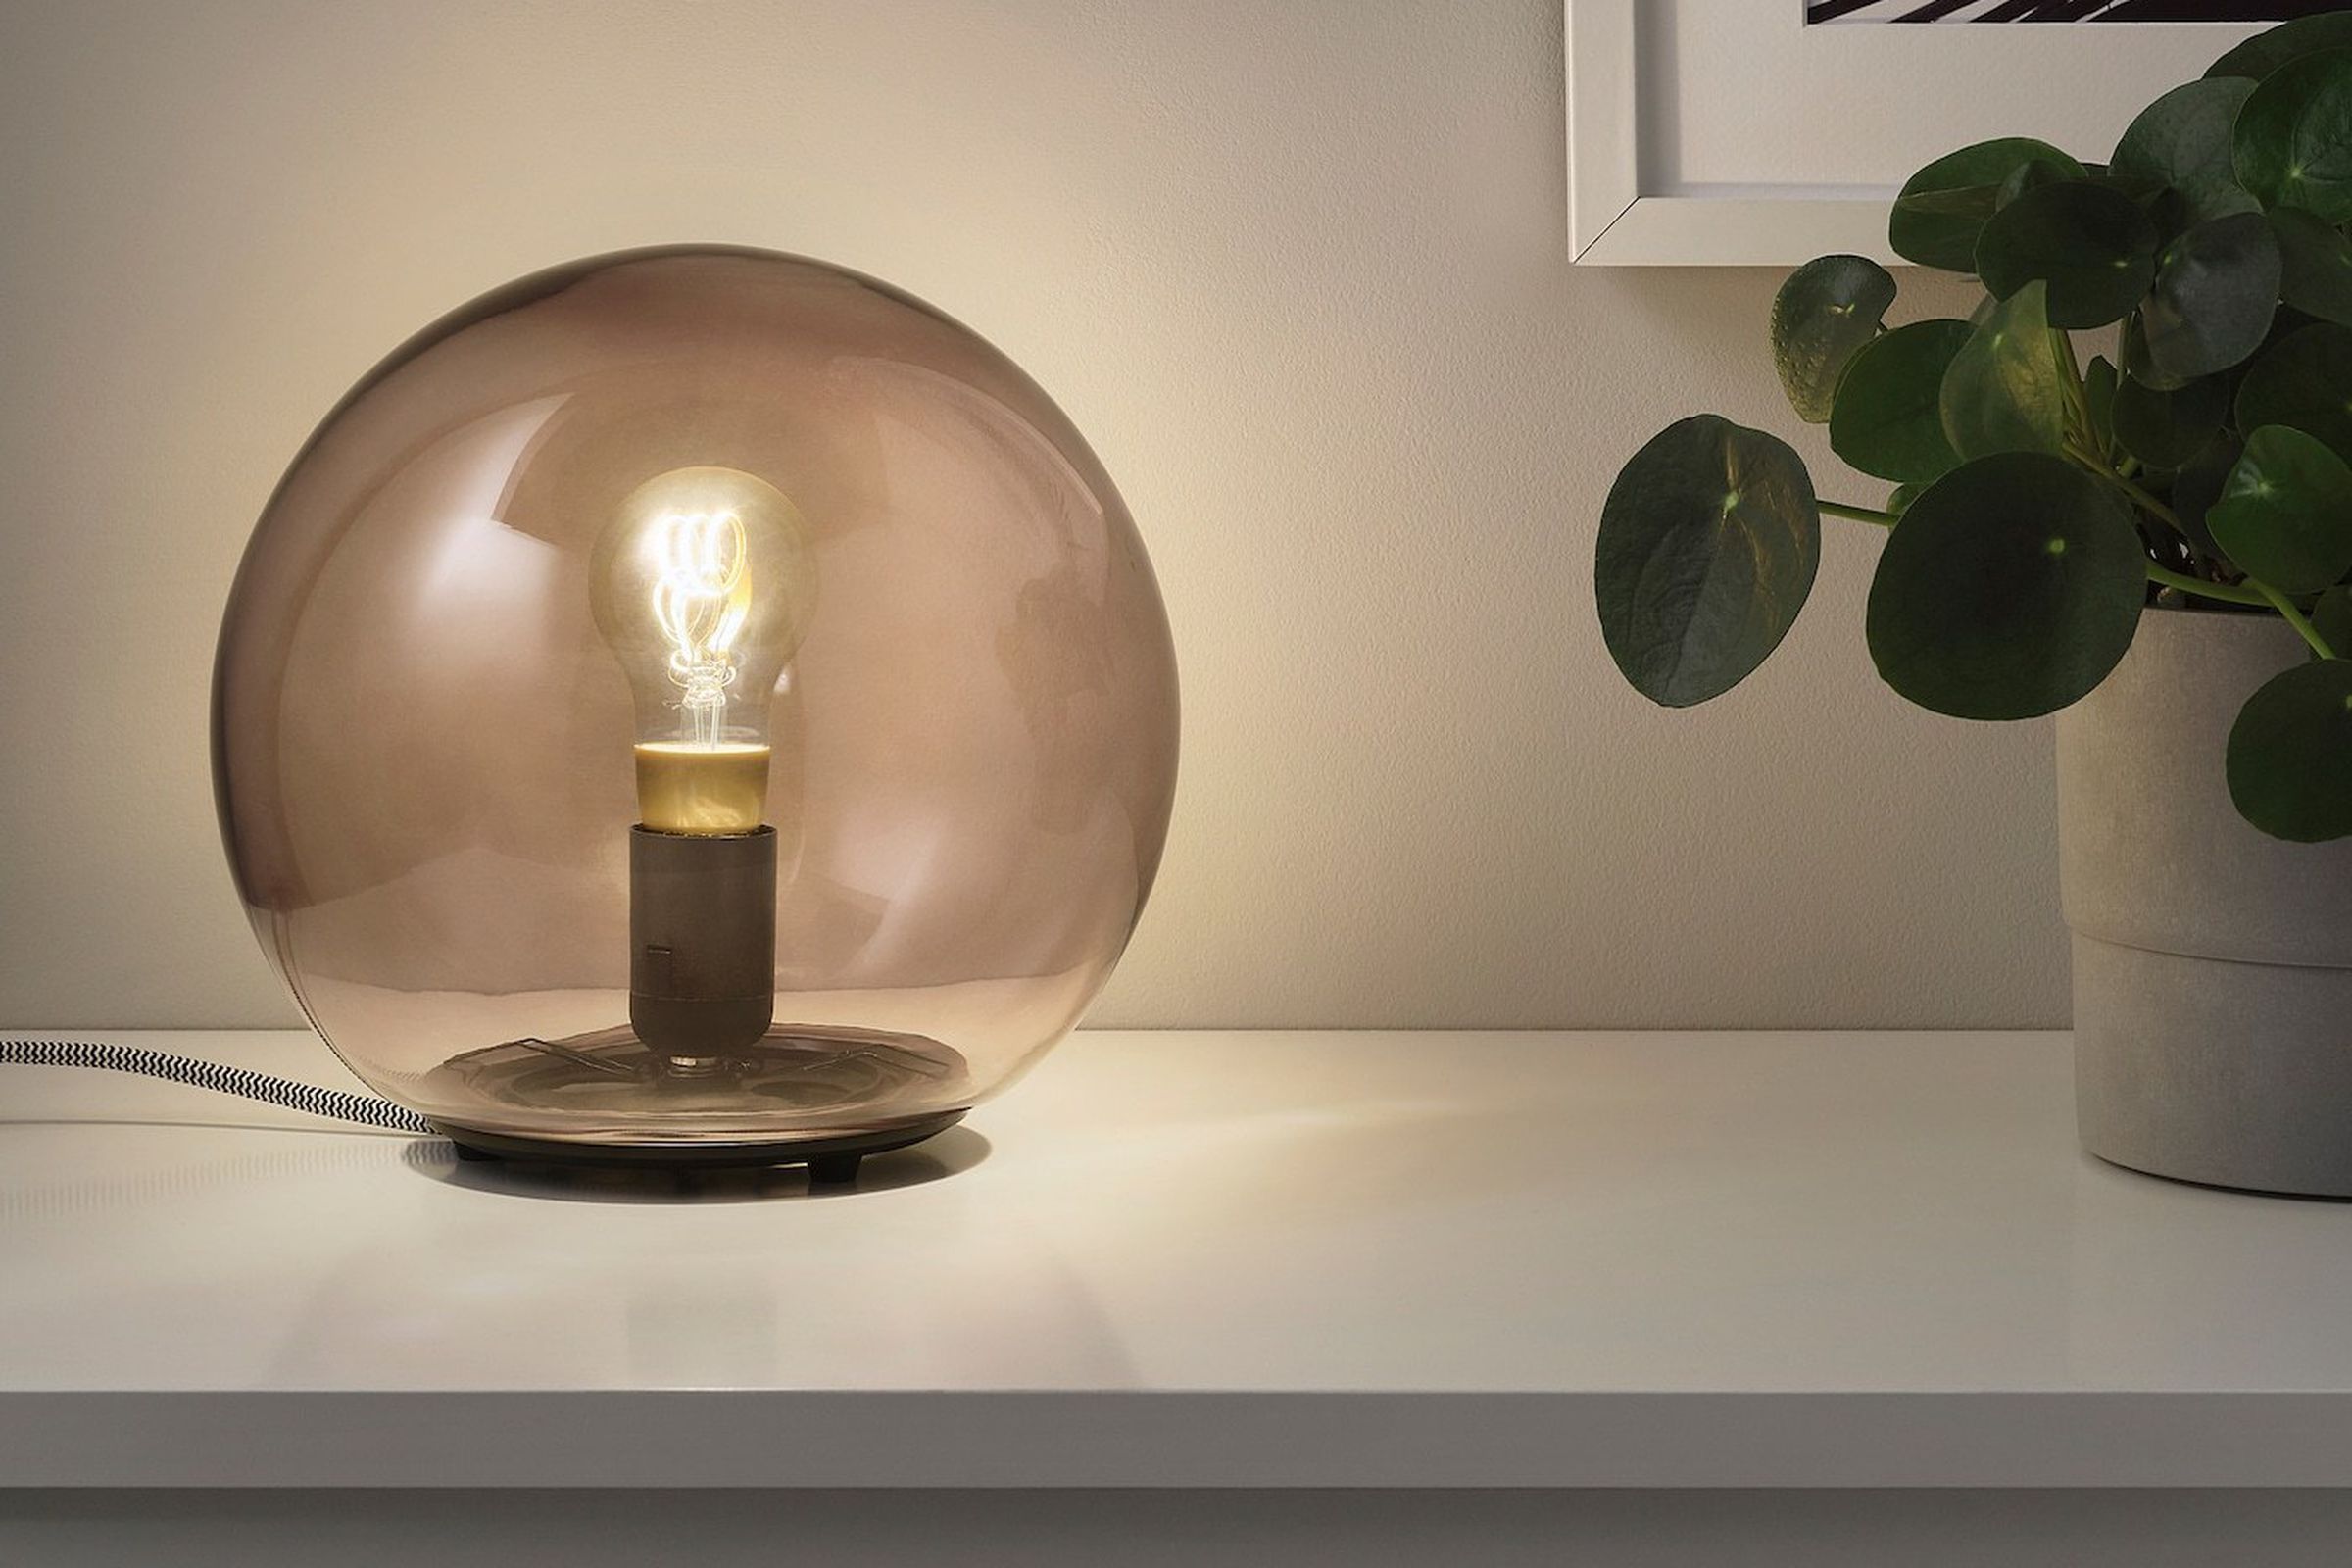 Ikea’s first Edison-style smart bulb.